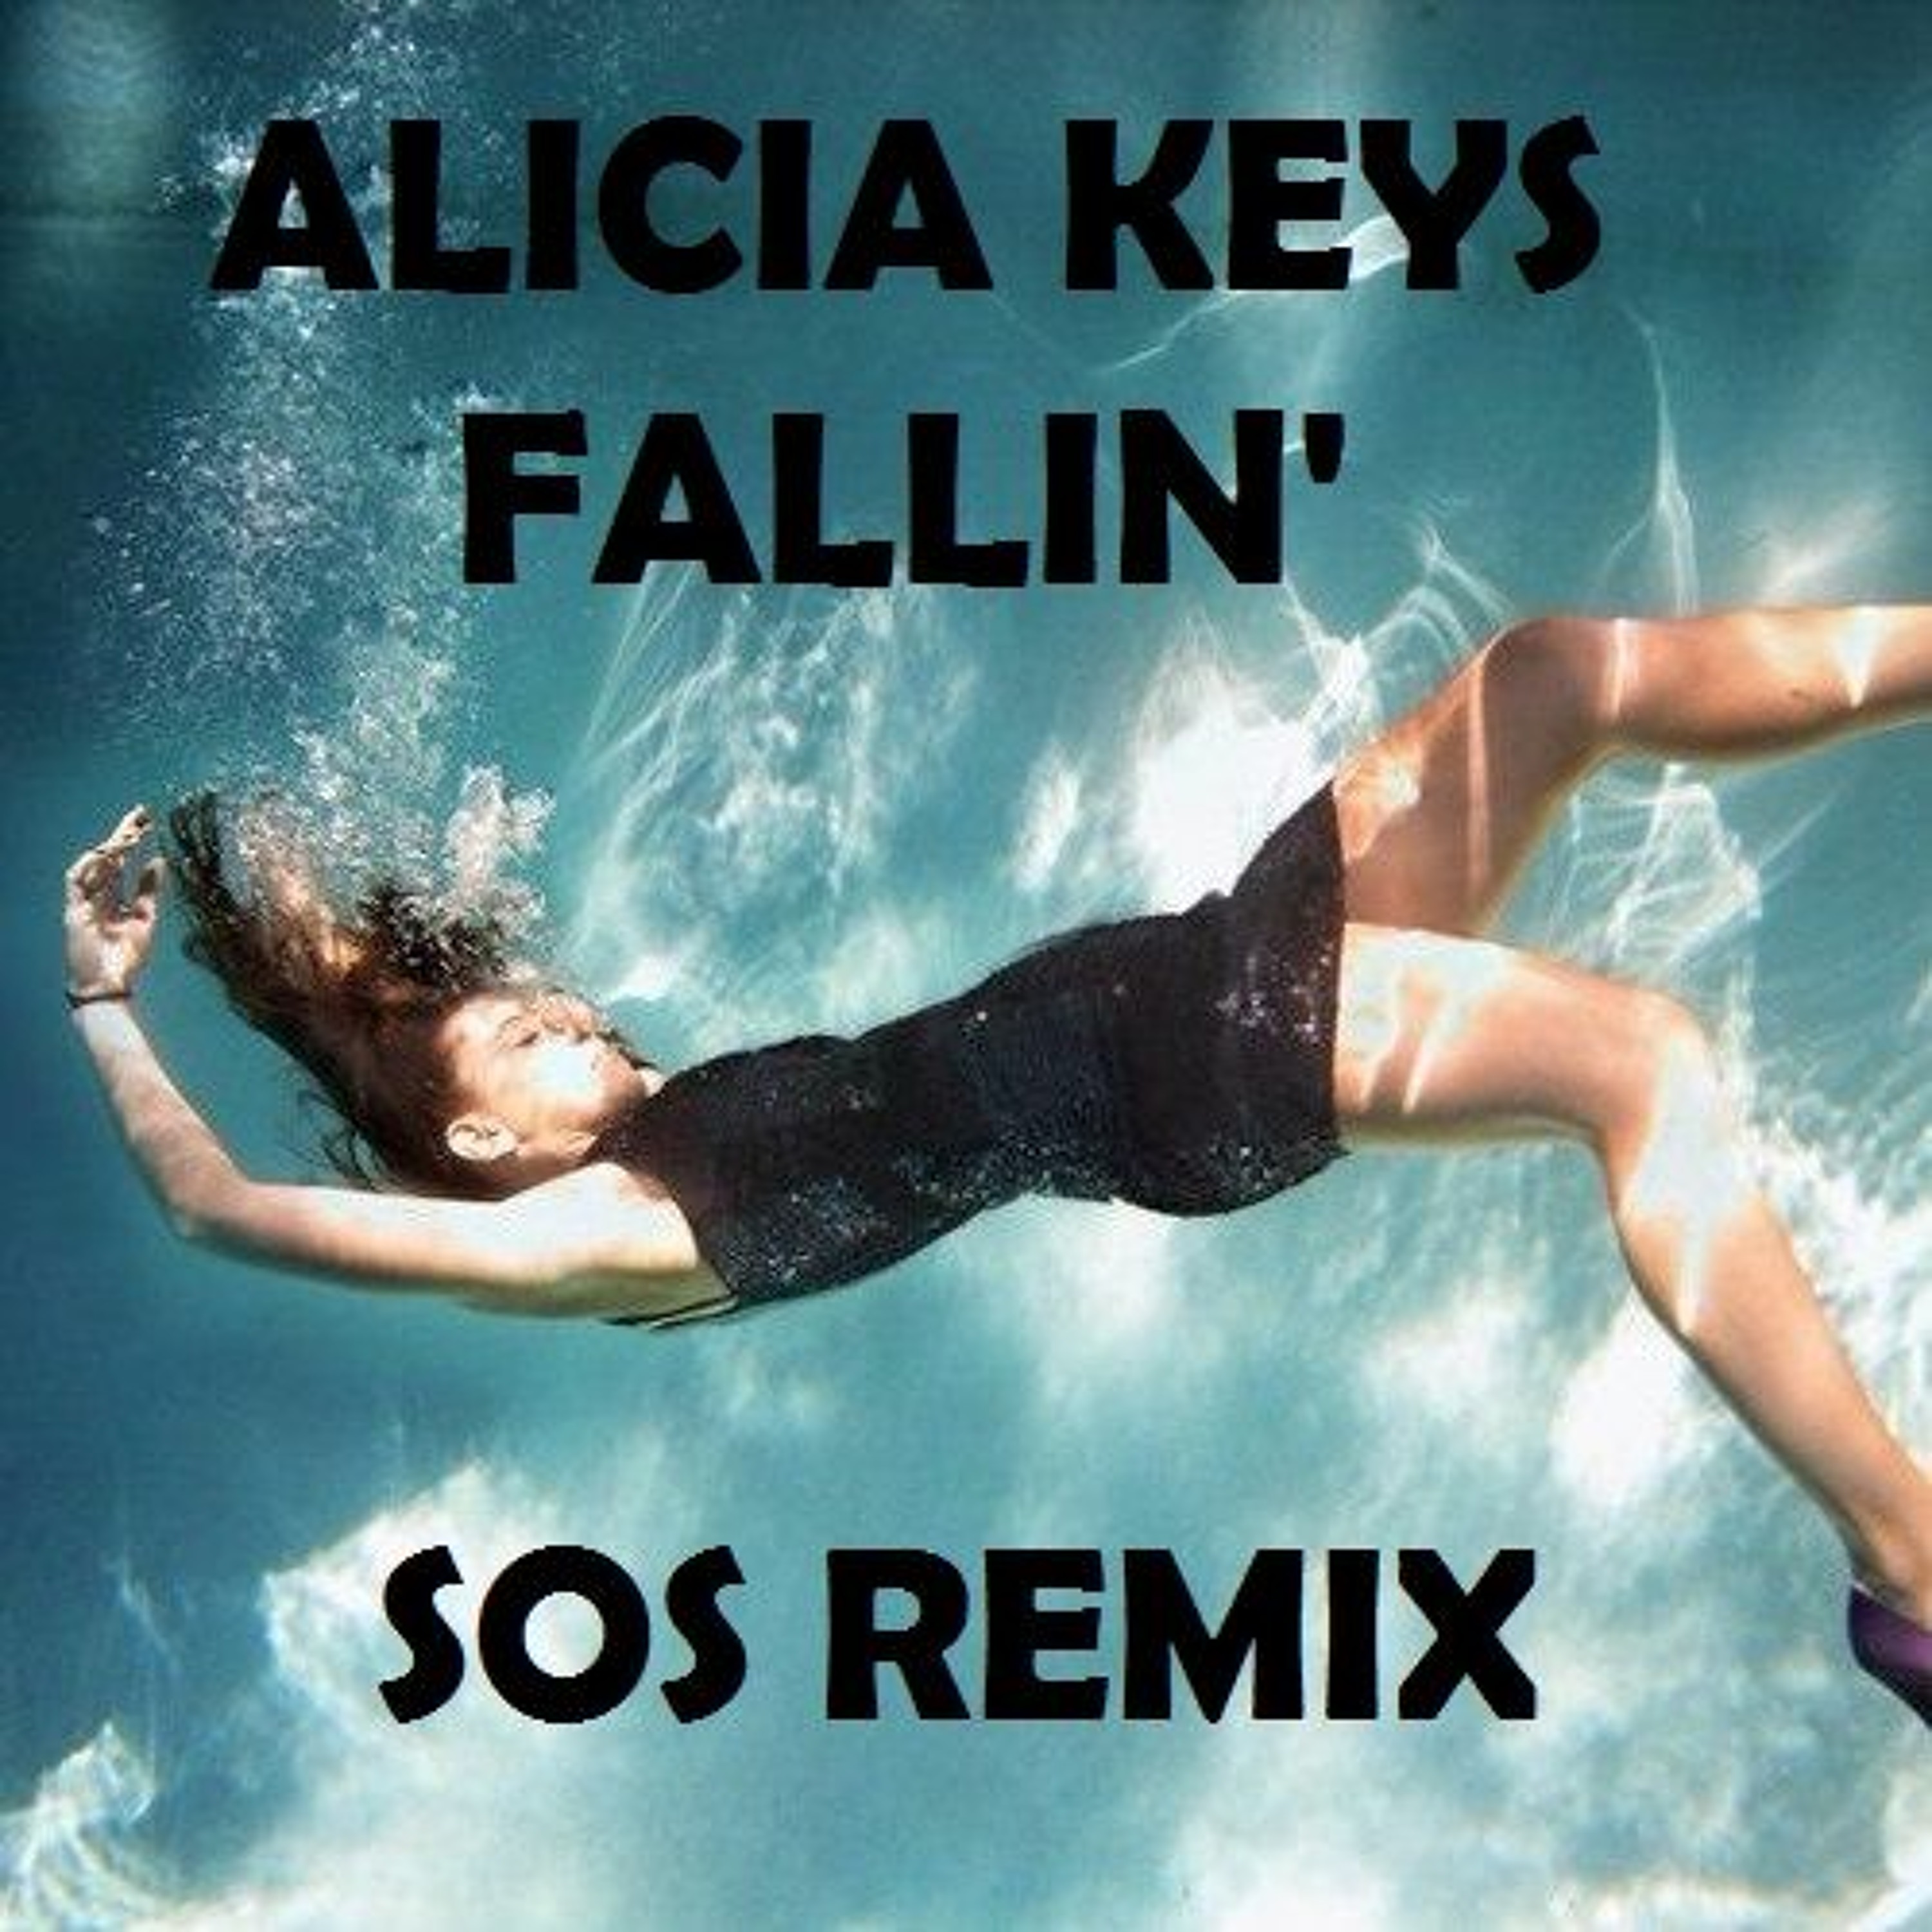 Alicia Keys - Fallin’ (SOS Remix)